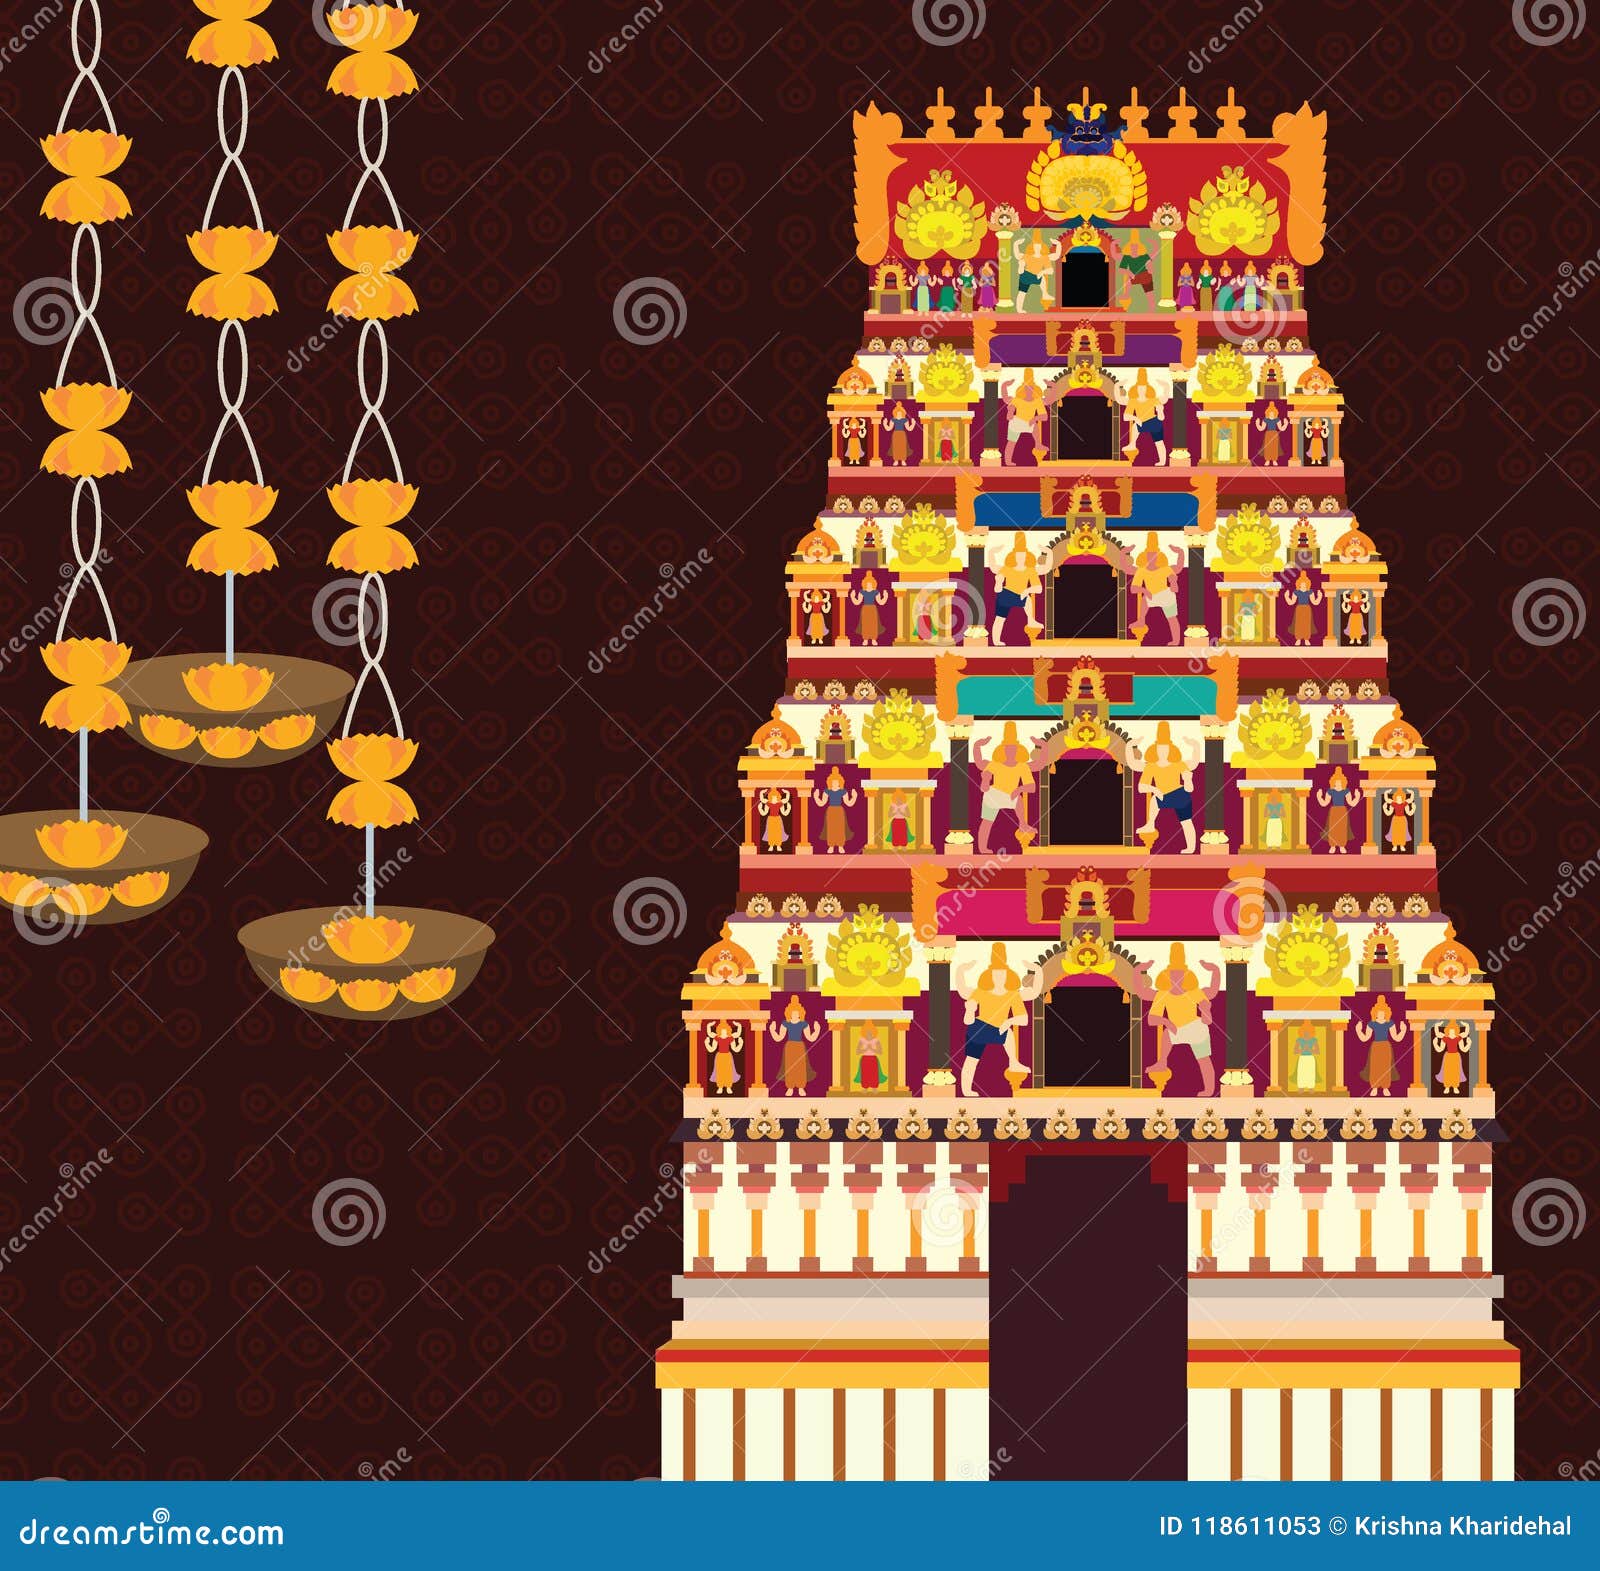 Hindu Temple on Pattern Background Stock Vector - Illustration of hindu,  holiday: 118611053